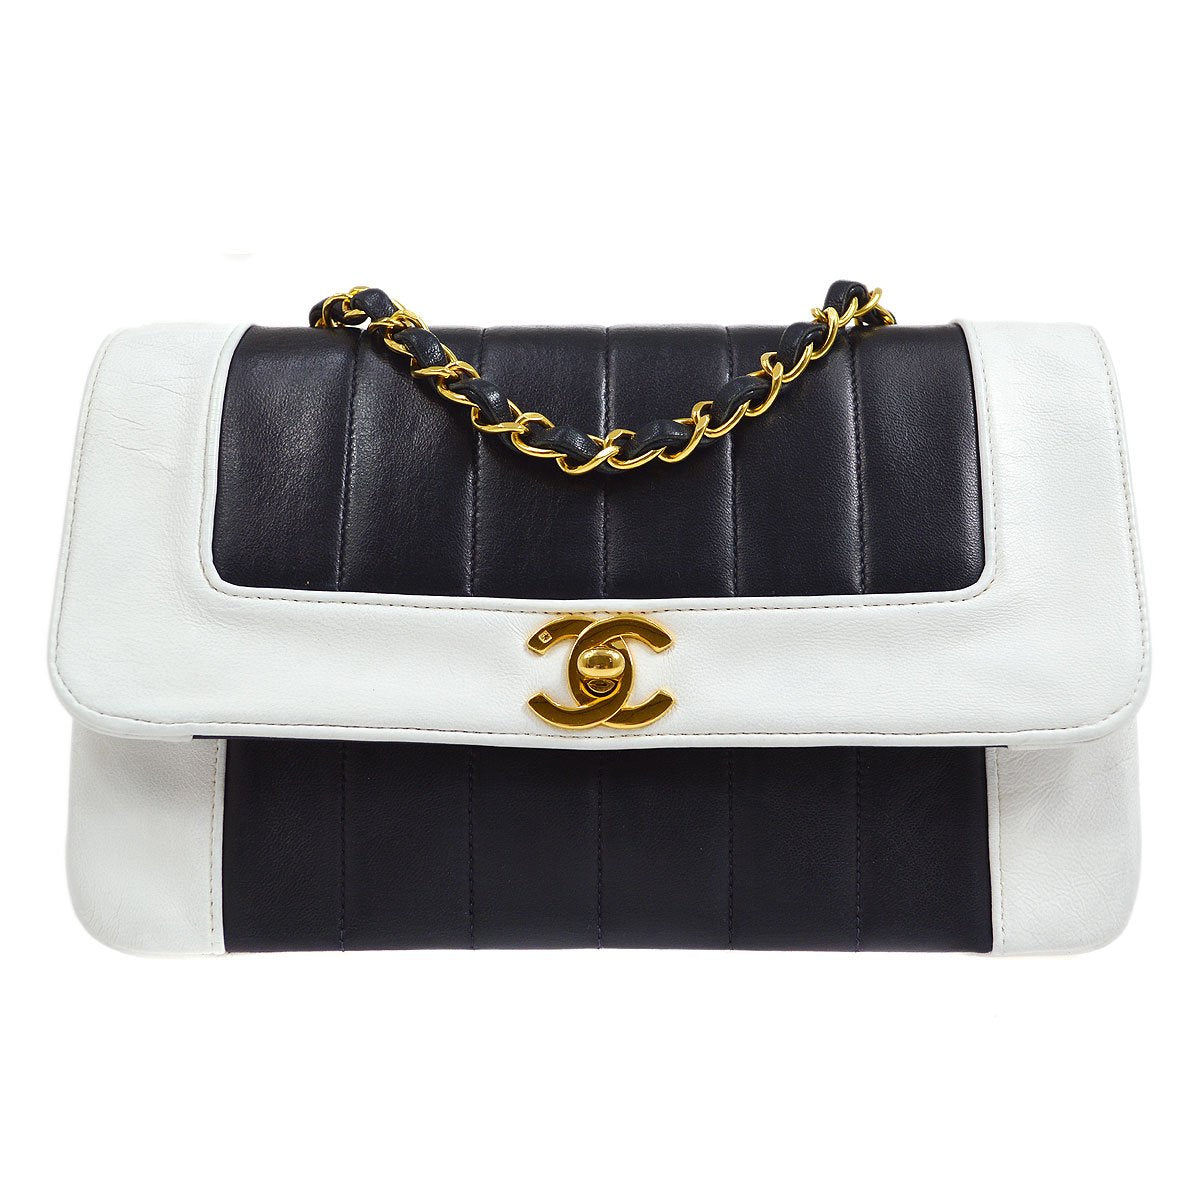 Trendy cc leather handbag Chanel Beige in Leather - 19255621